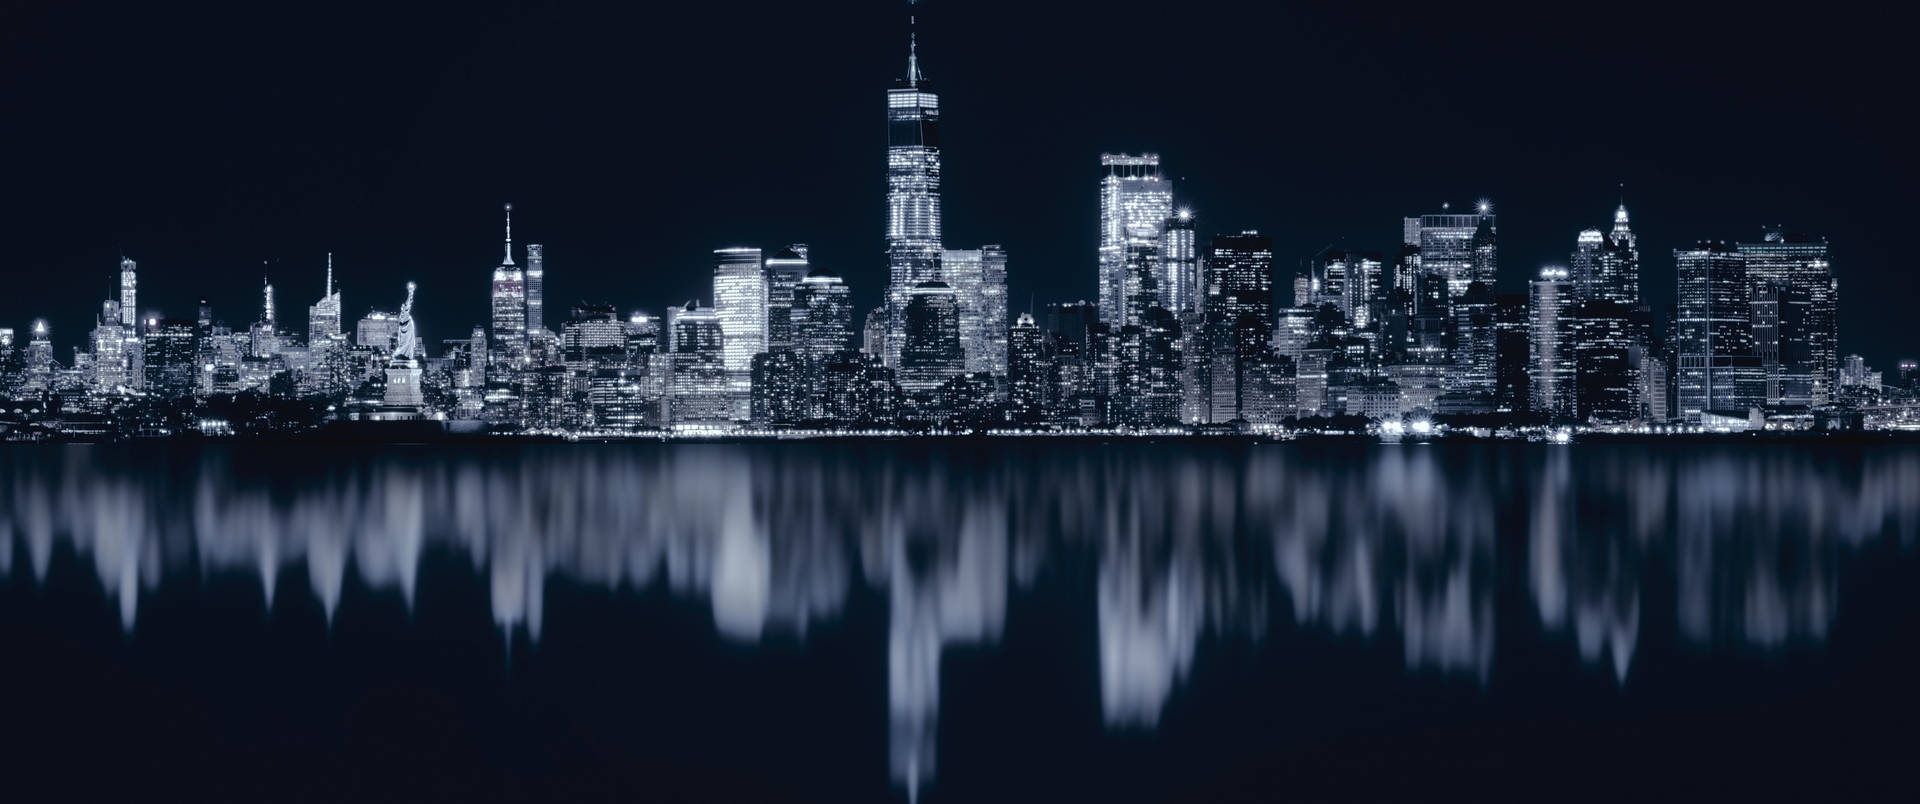 3440x1440 City Of New York Monochrome Background